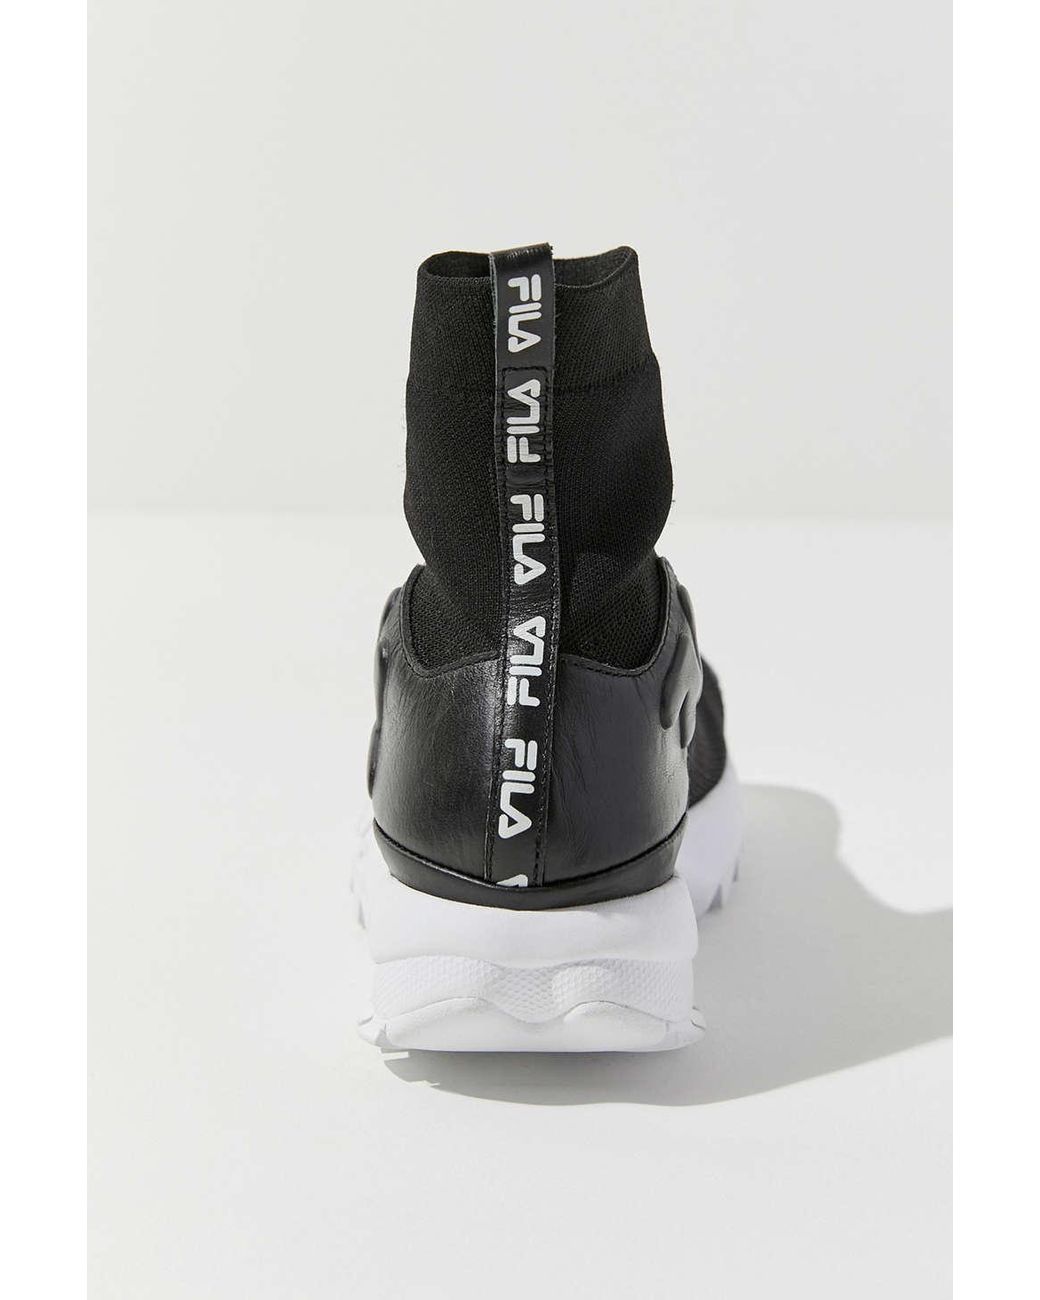 Fila Fila Uo Exclusive Disruptor Sock Boot in Black | Lyst